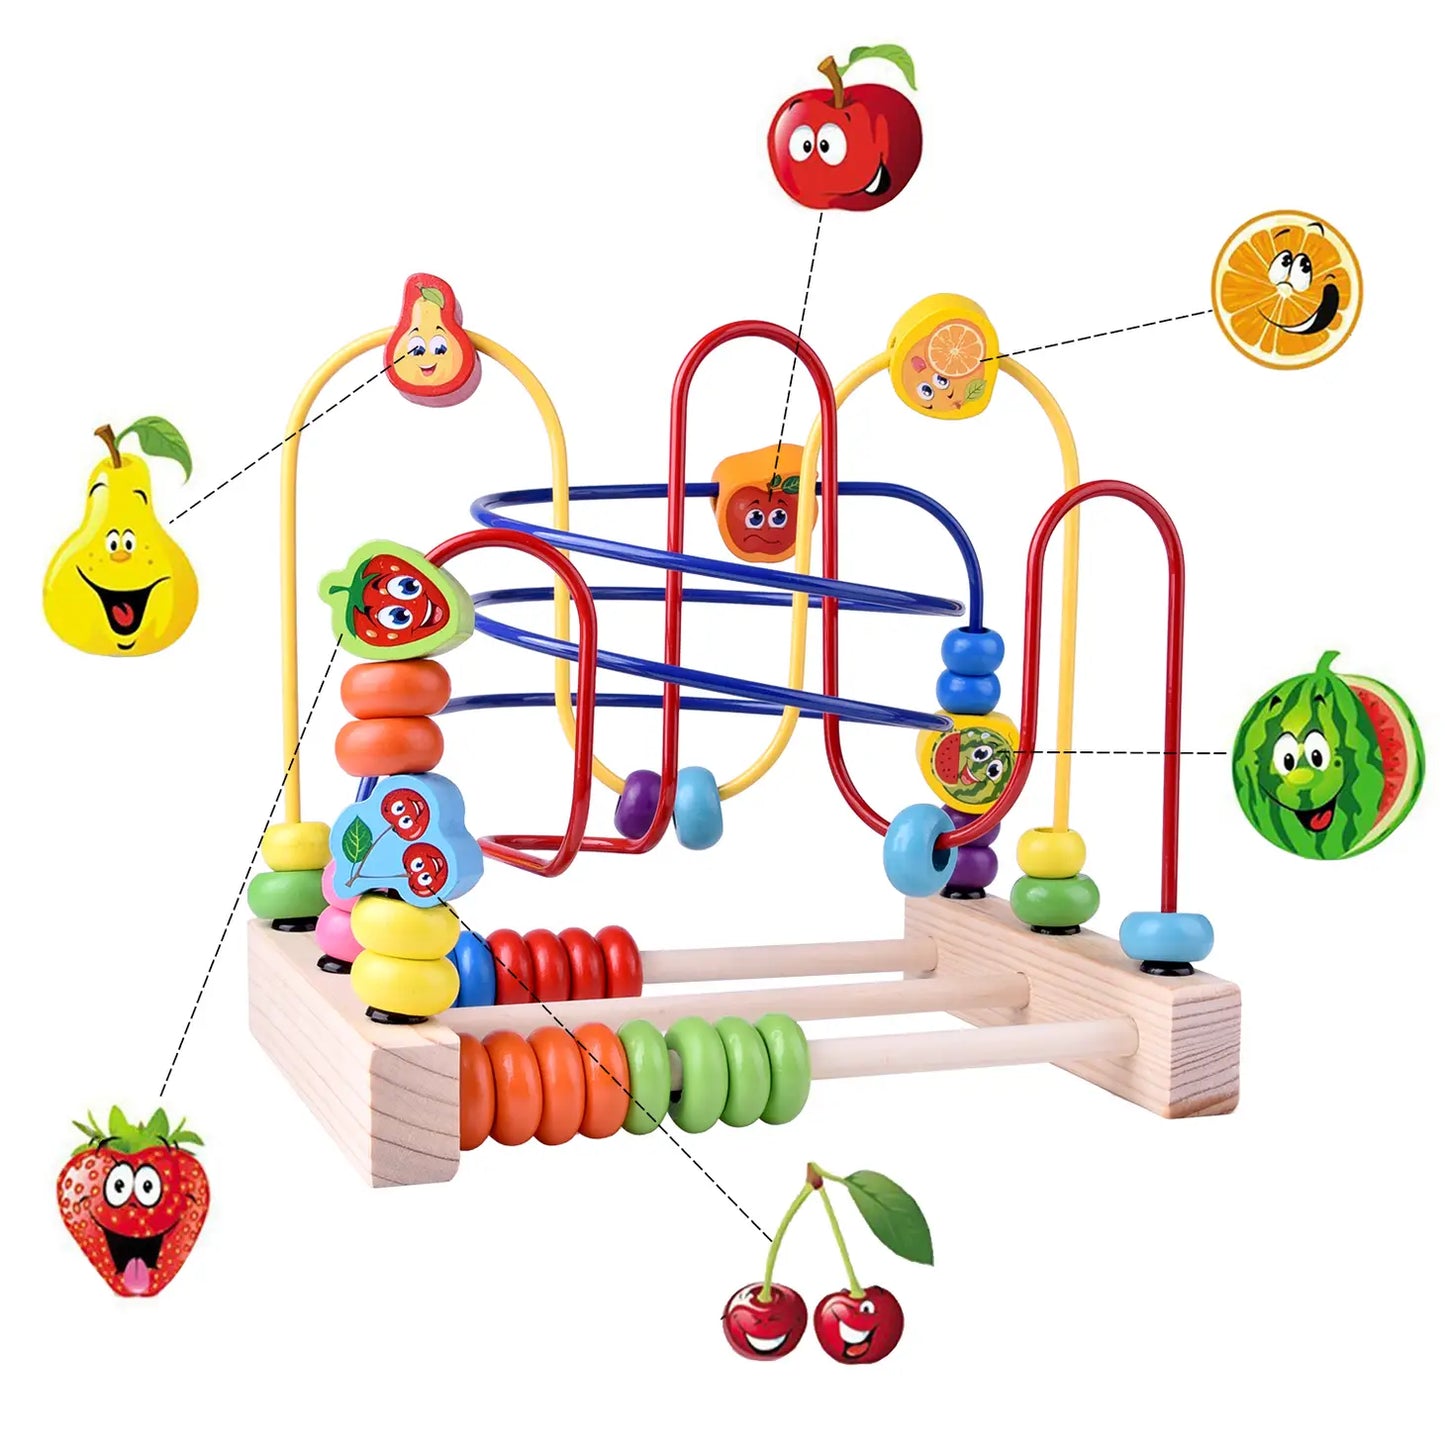 Wooden Bead Maze Roller Coaster Educational Toys